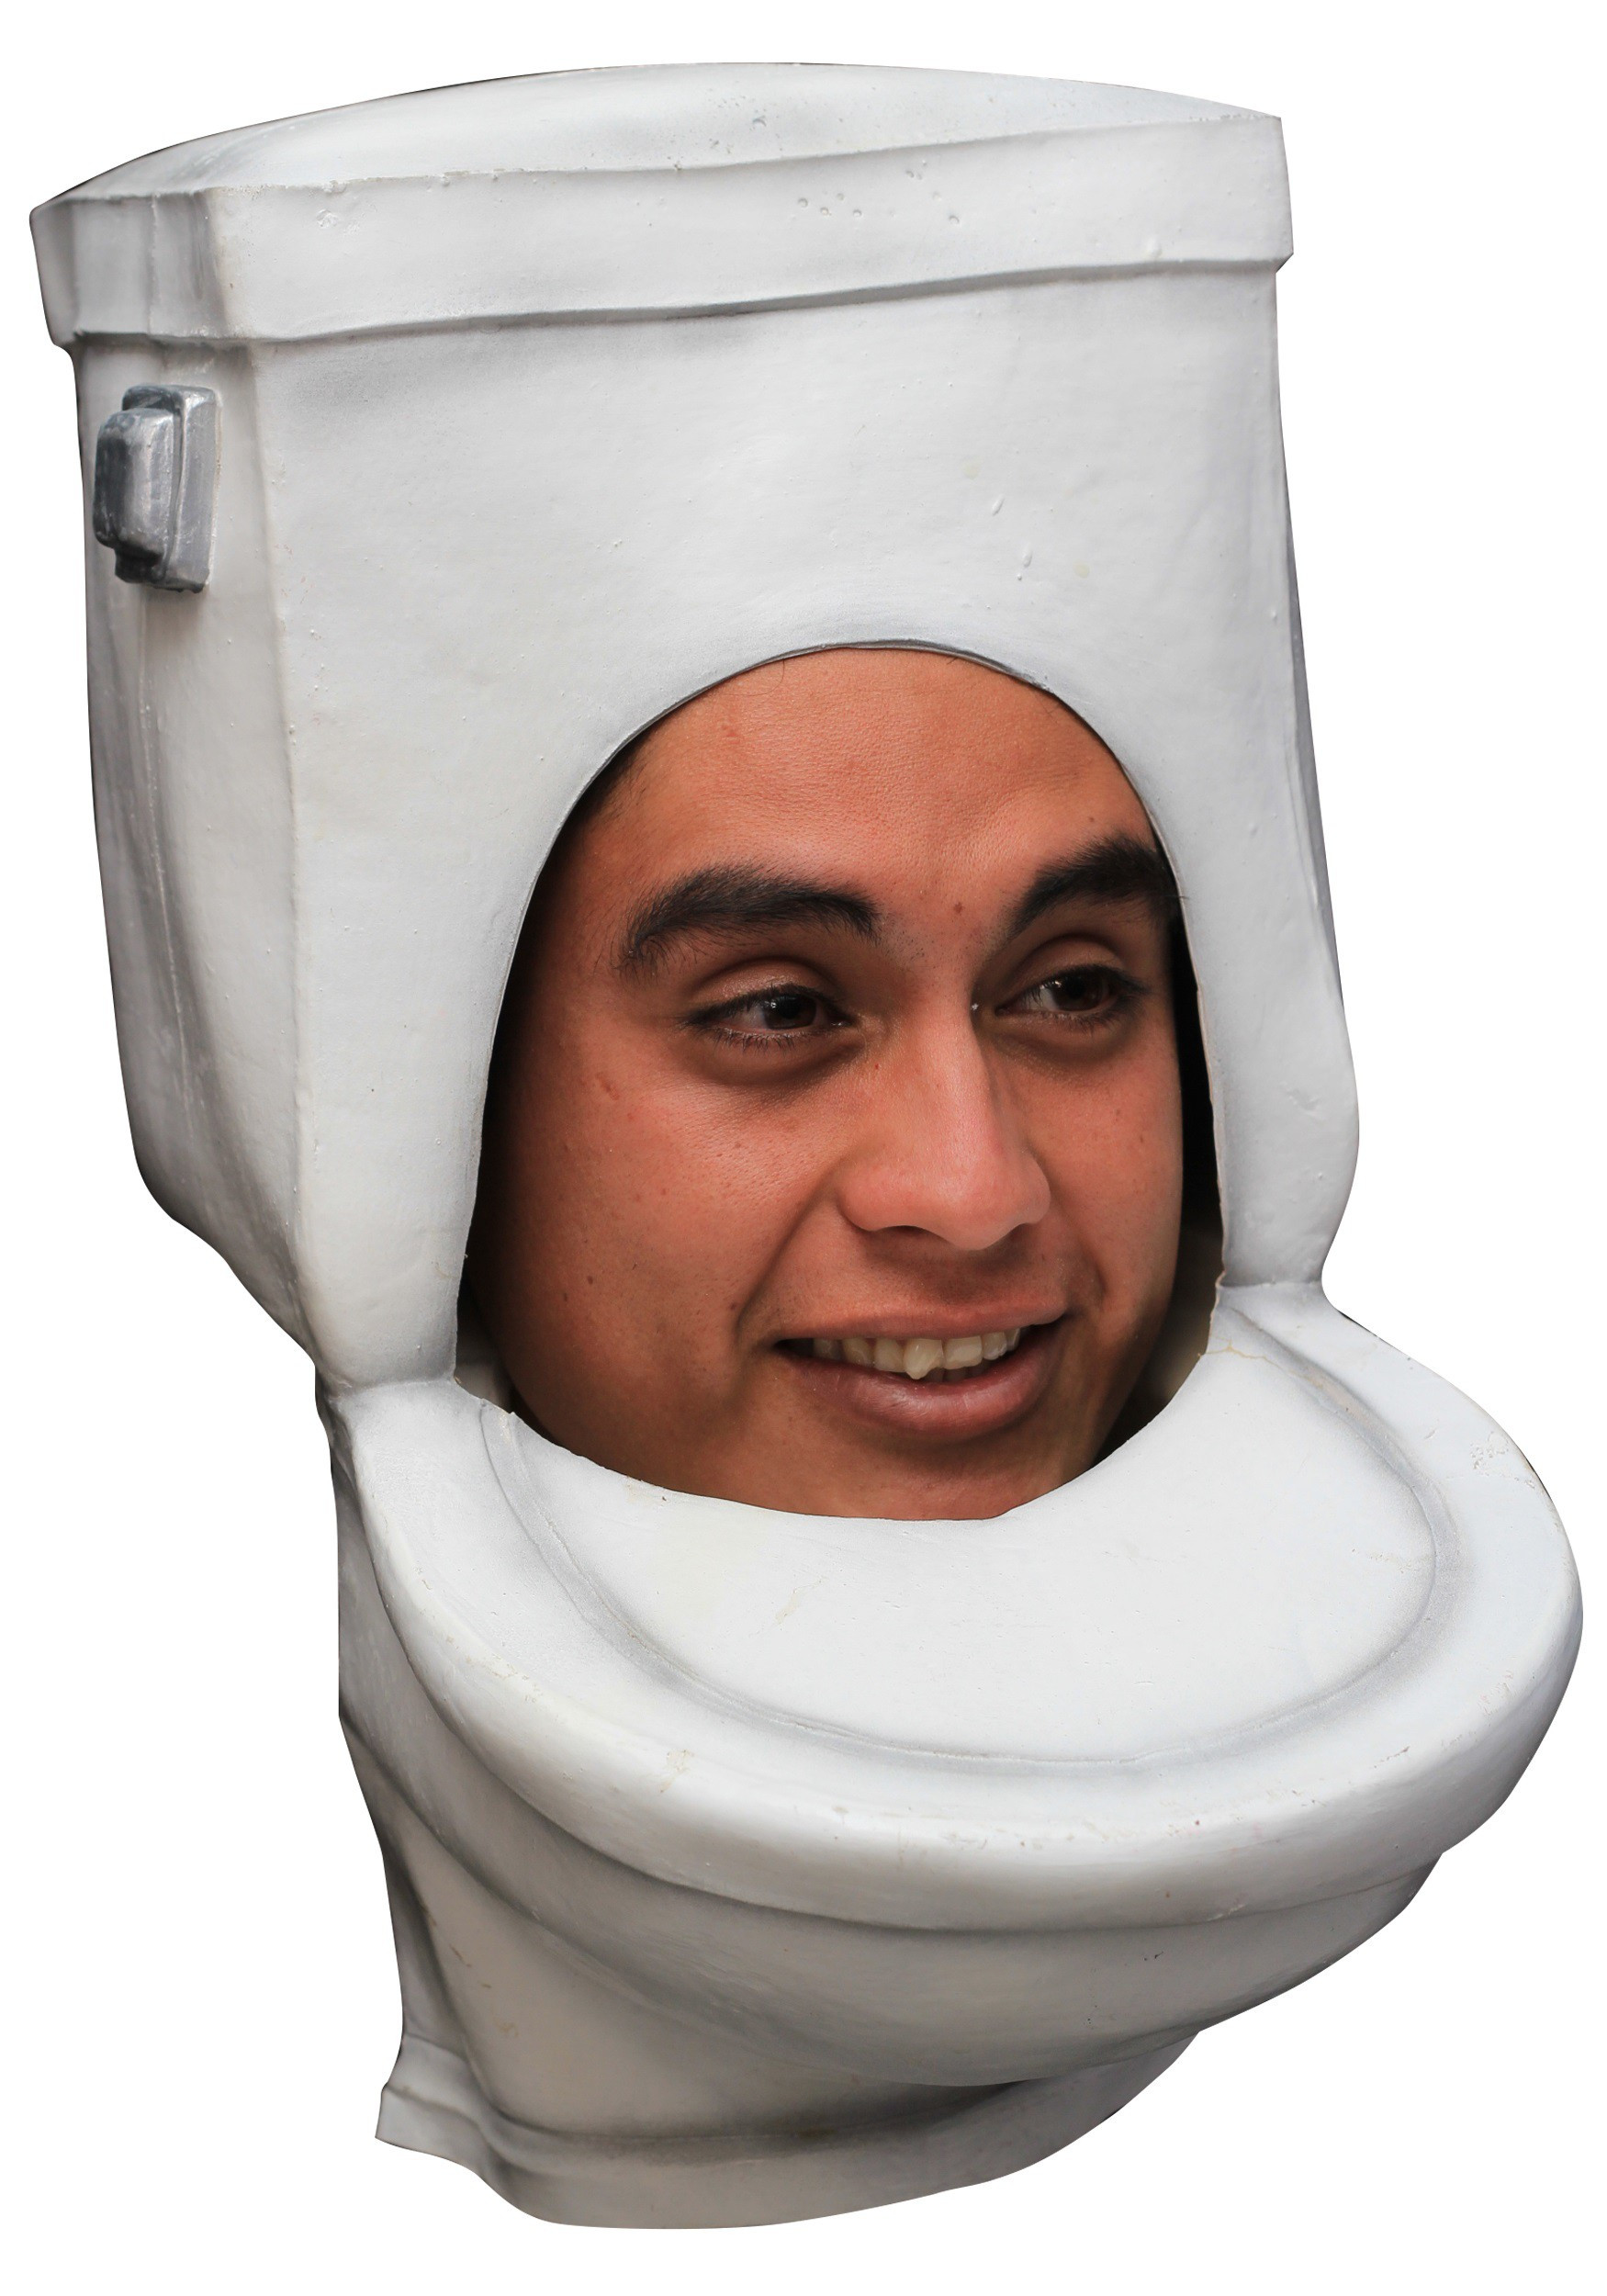 Toilet Halloween Costume
 The Toilet Adult Mask